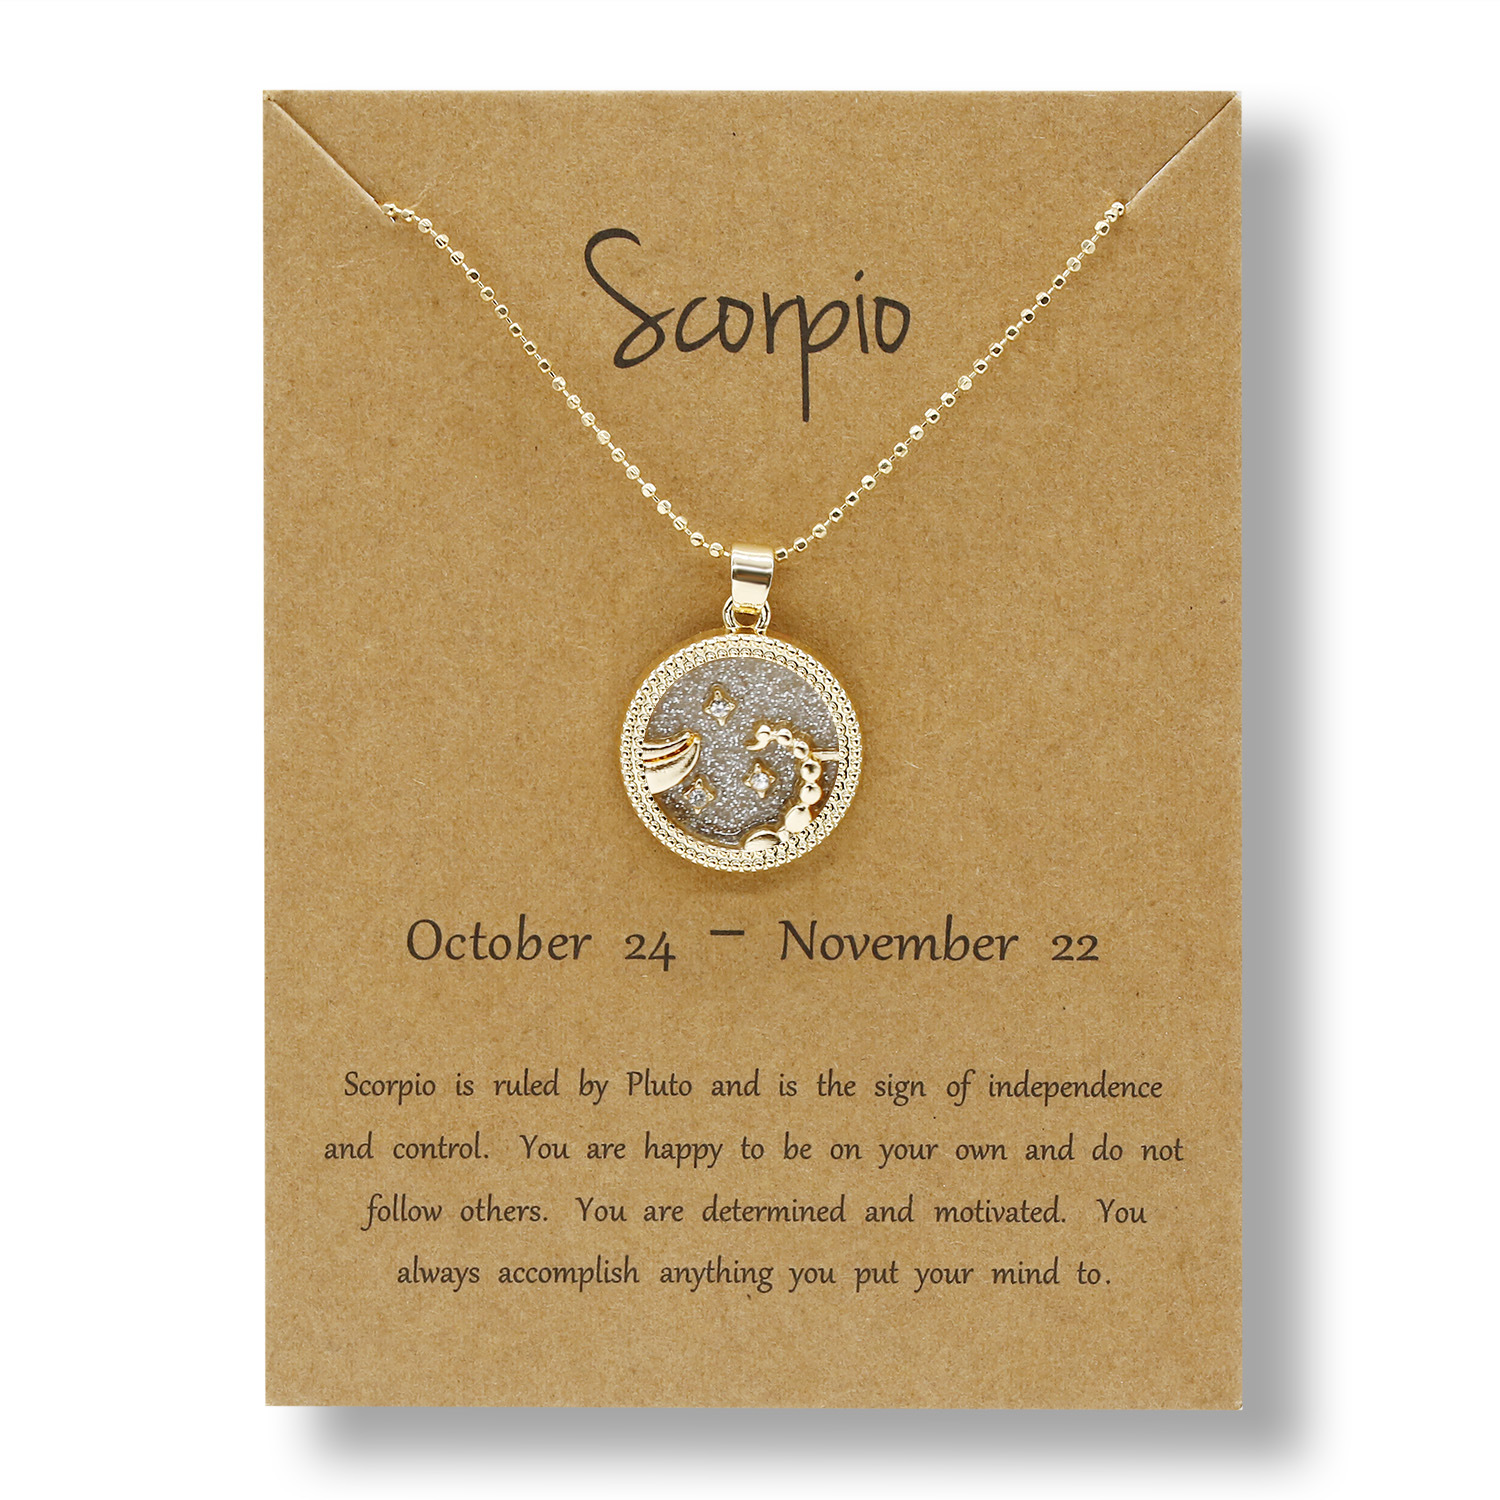 Scorpio (Golden Day)